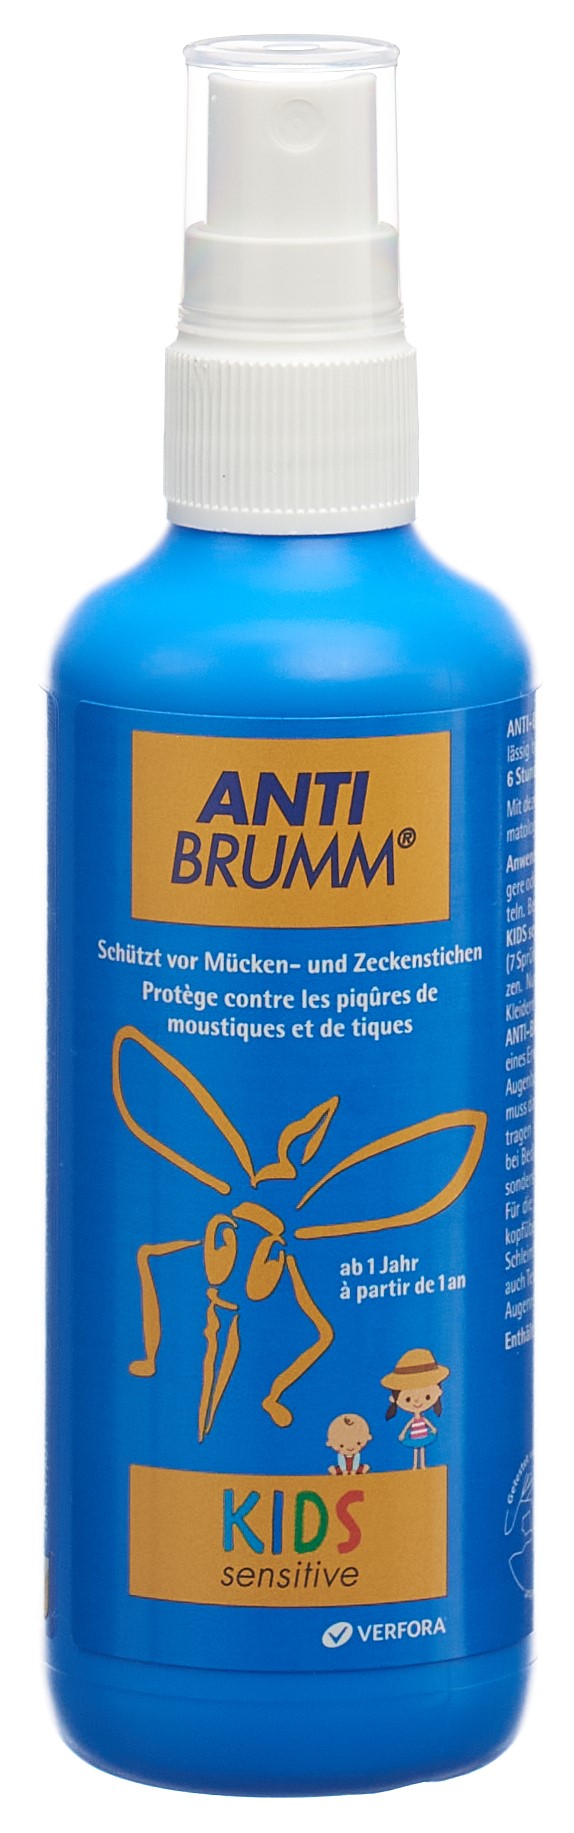 ANTI BRUMM Kids sensitive Spr 150 ml